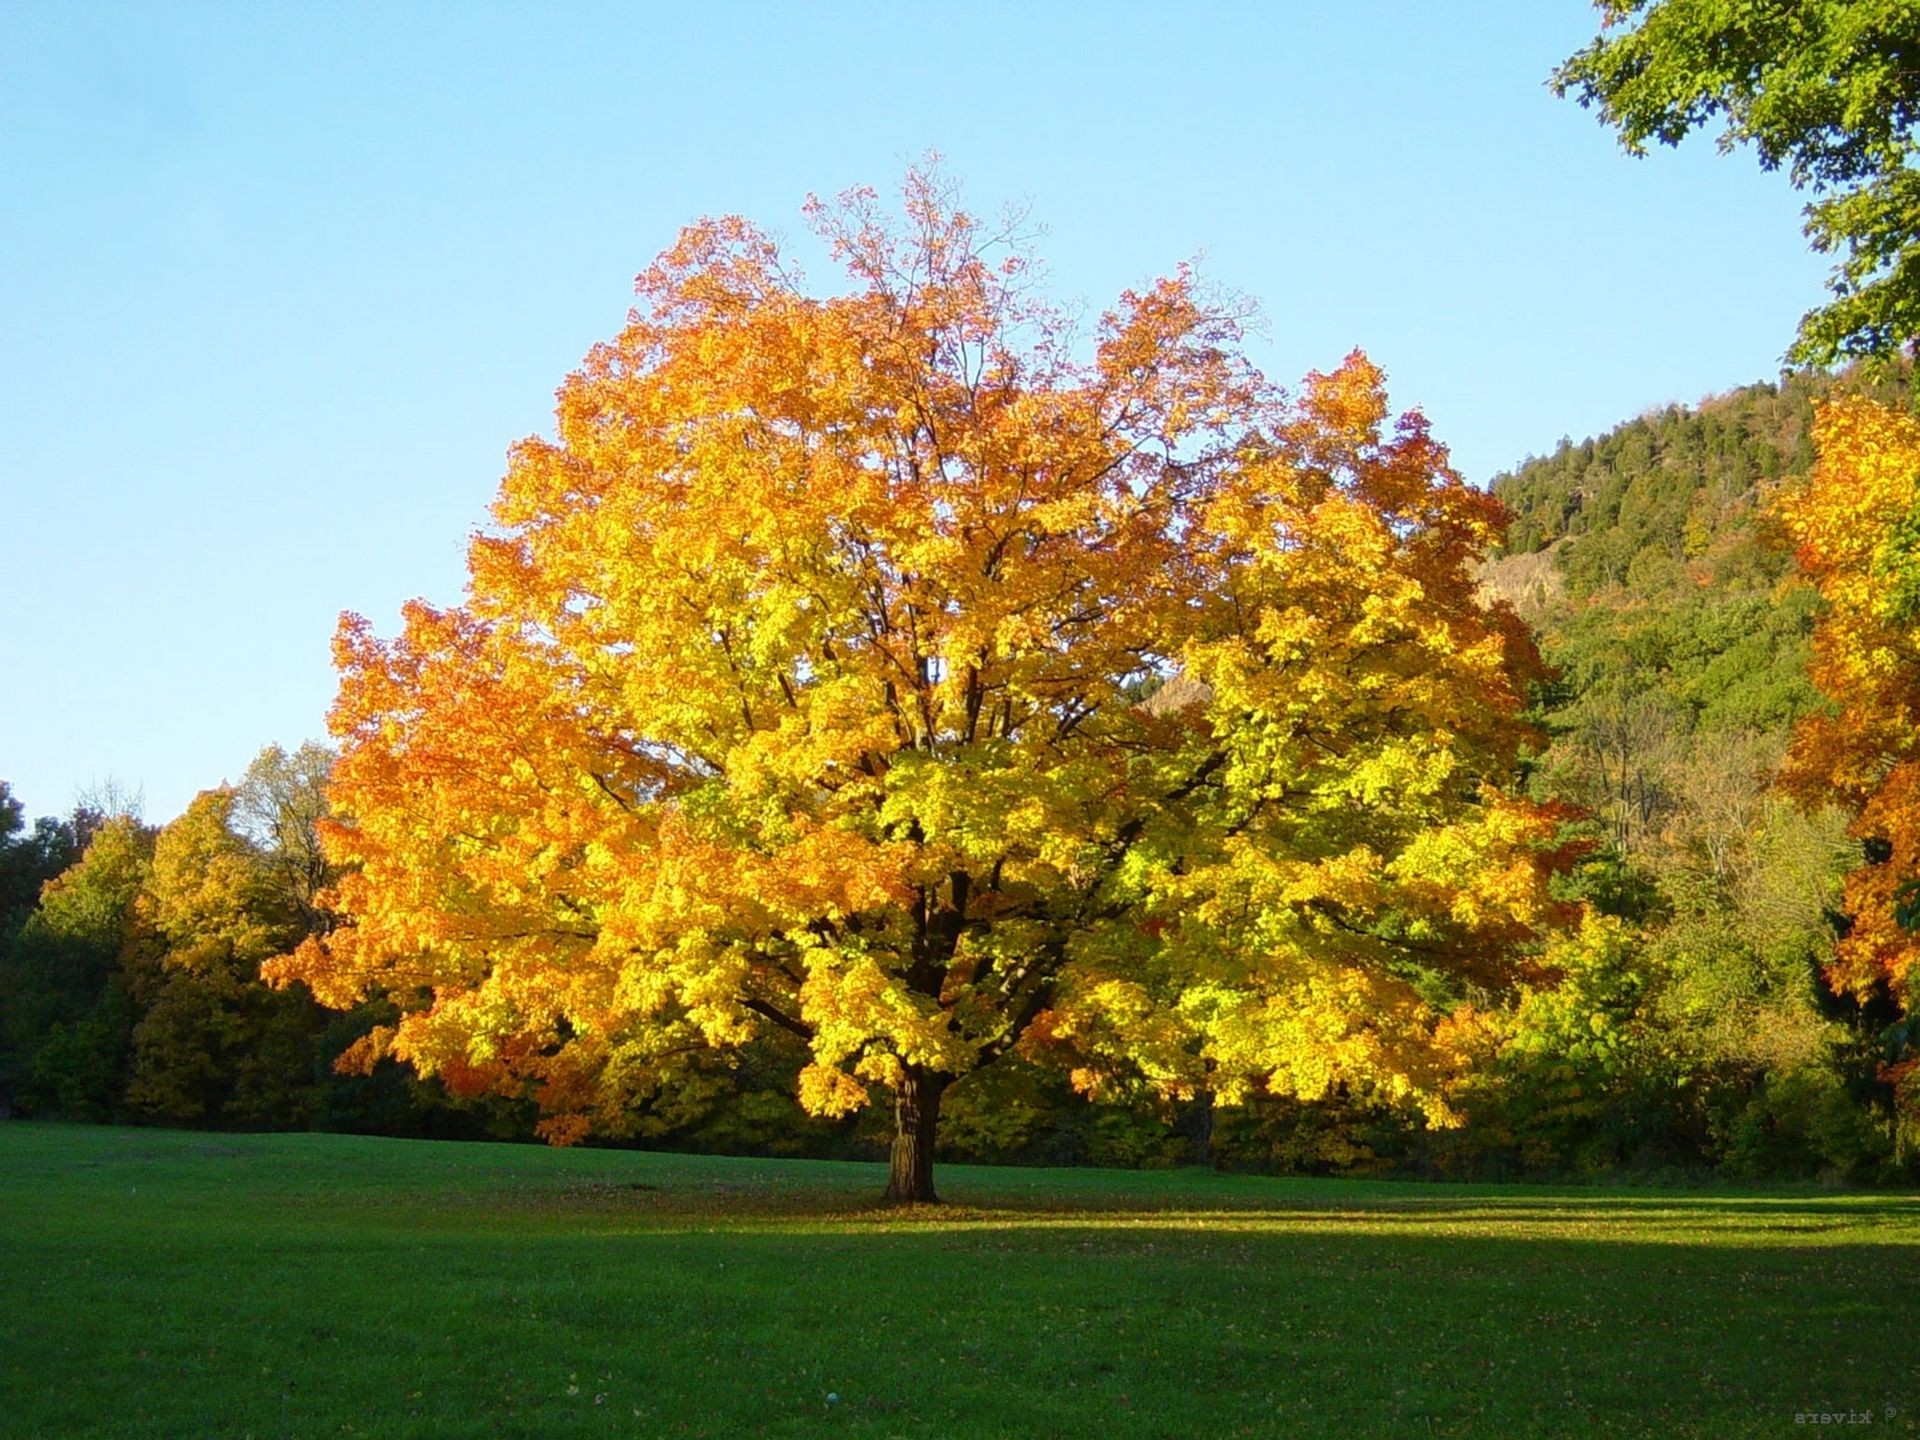 autumn trees pictures